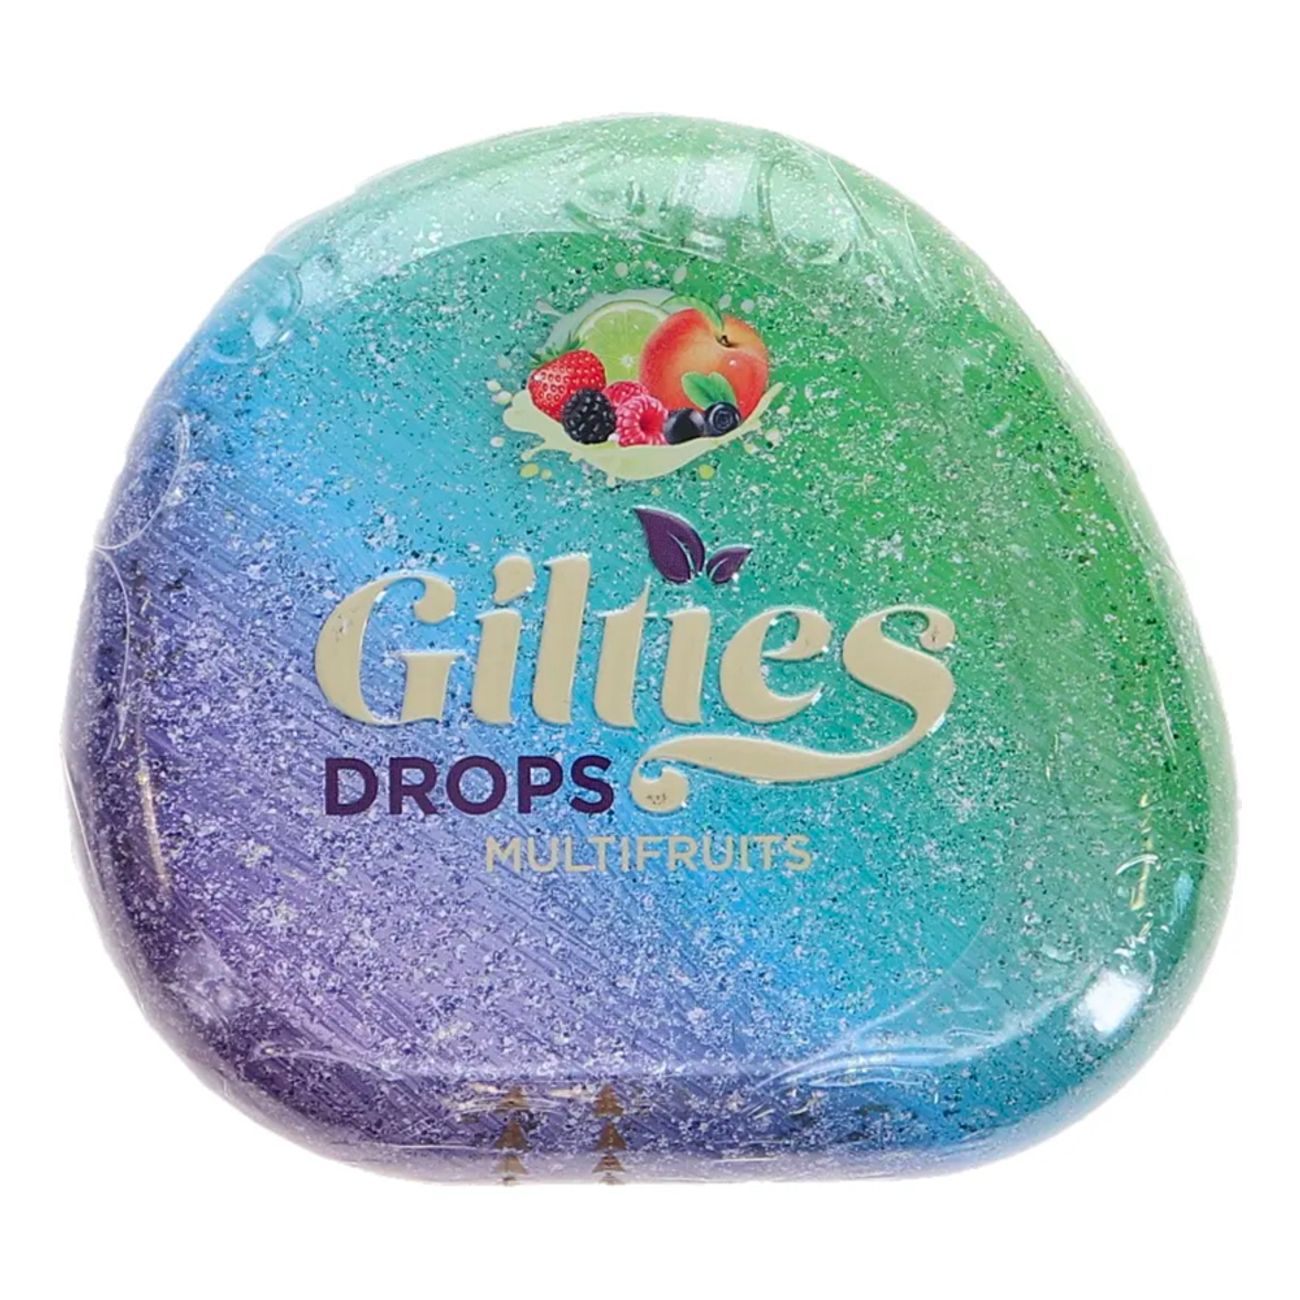 gilties-drops-multifruits-86567-1